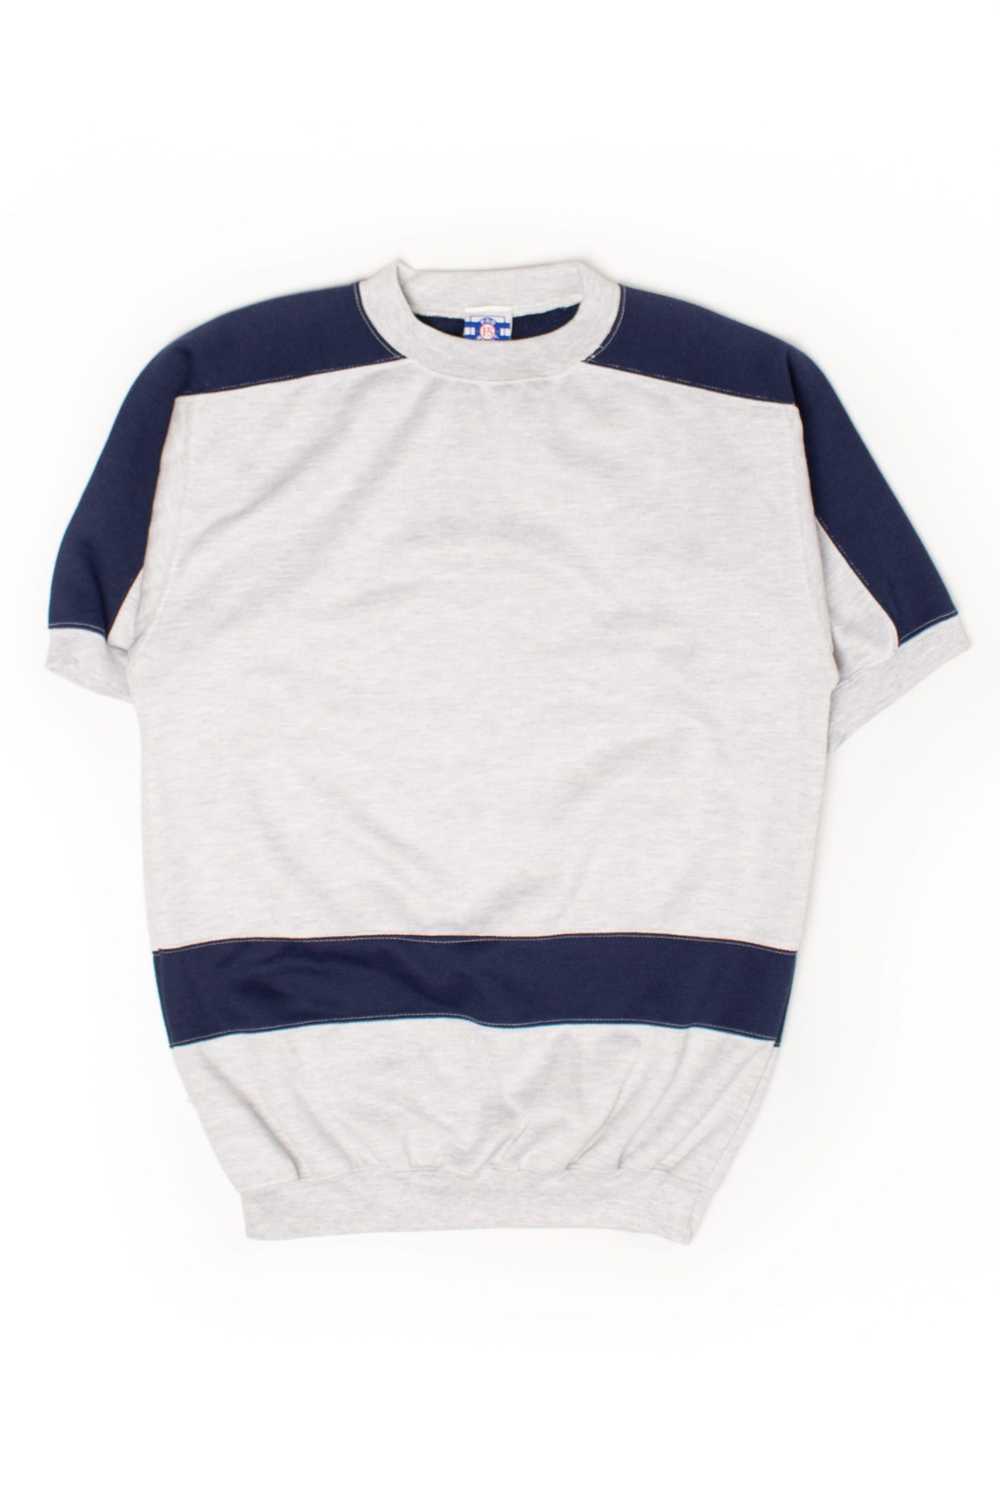 Vintage Two-Tone Short Sleeve Sweatshirt (1990s) - image 2